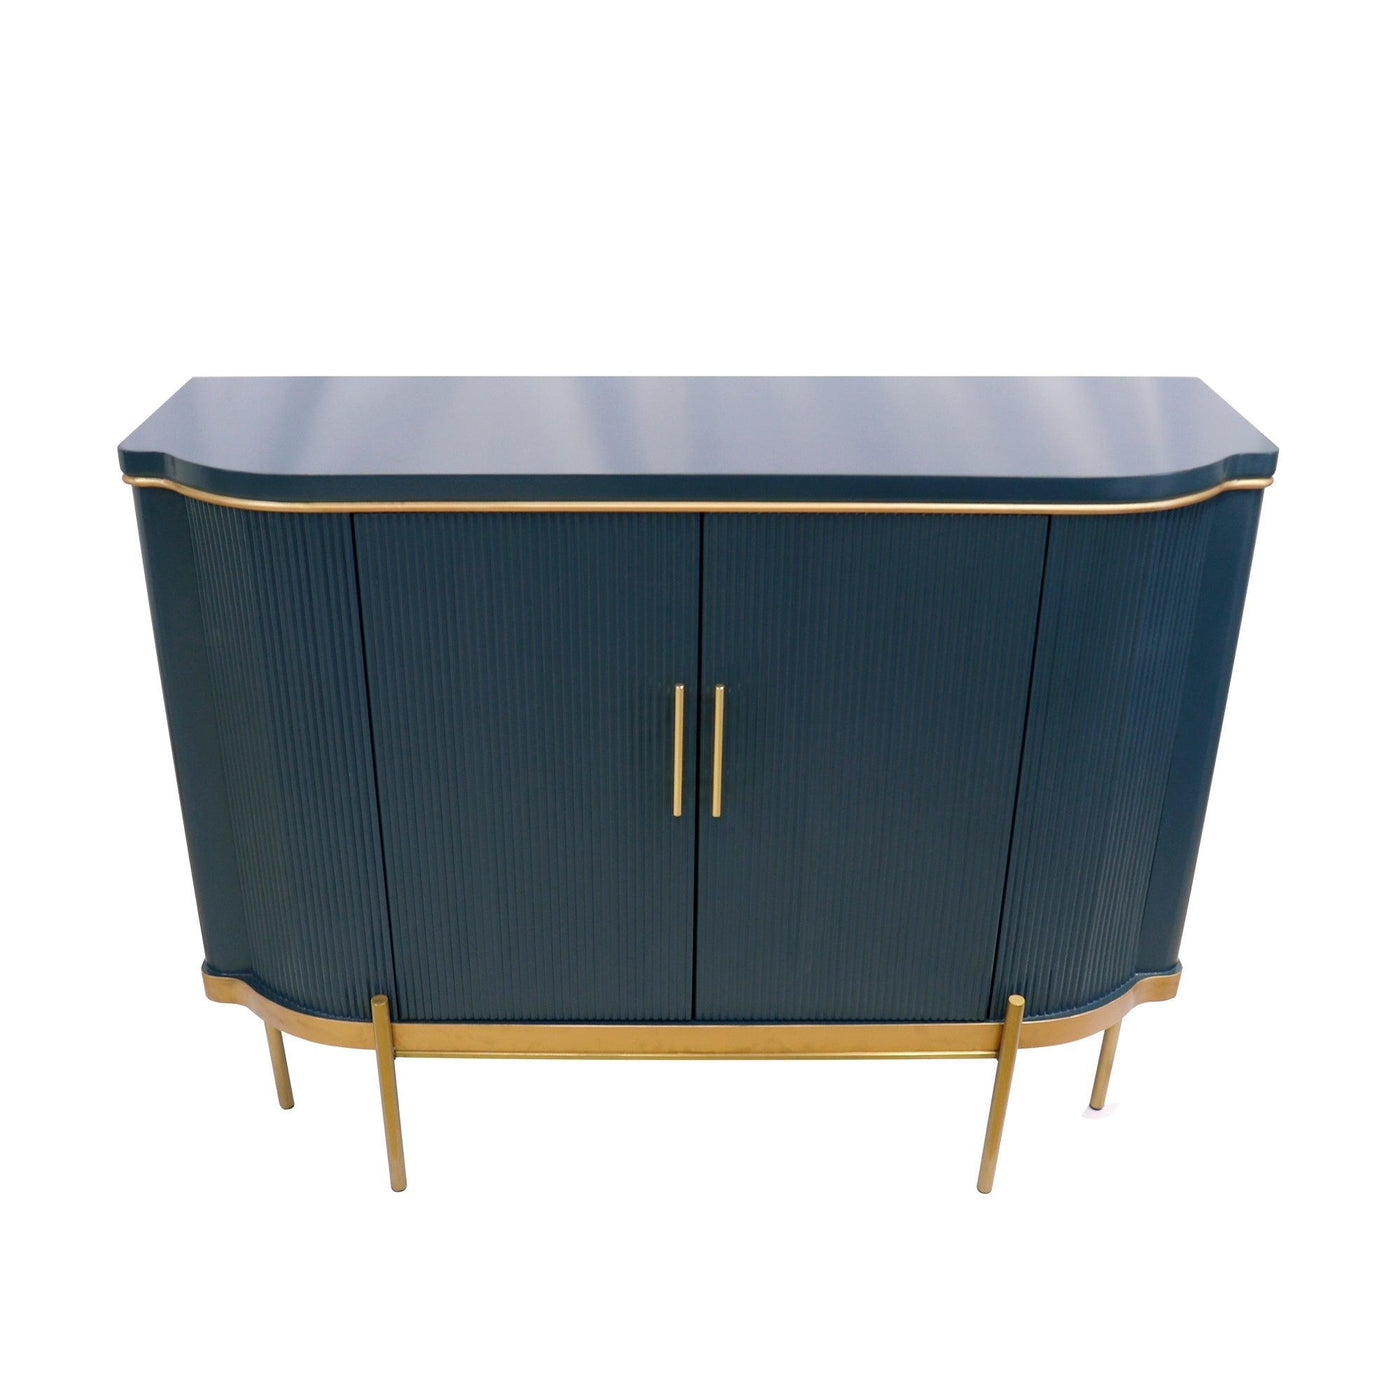 Canvello Amelia Teal Cabinet, 2 Doors & Gold Polished Metal Frame - Cabinets for Living Room, Home Office, Bedroom